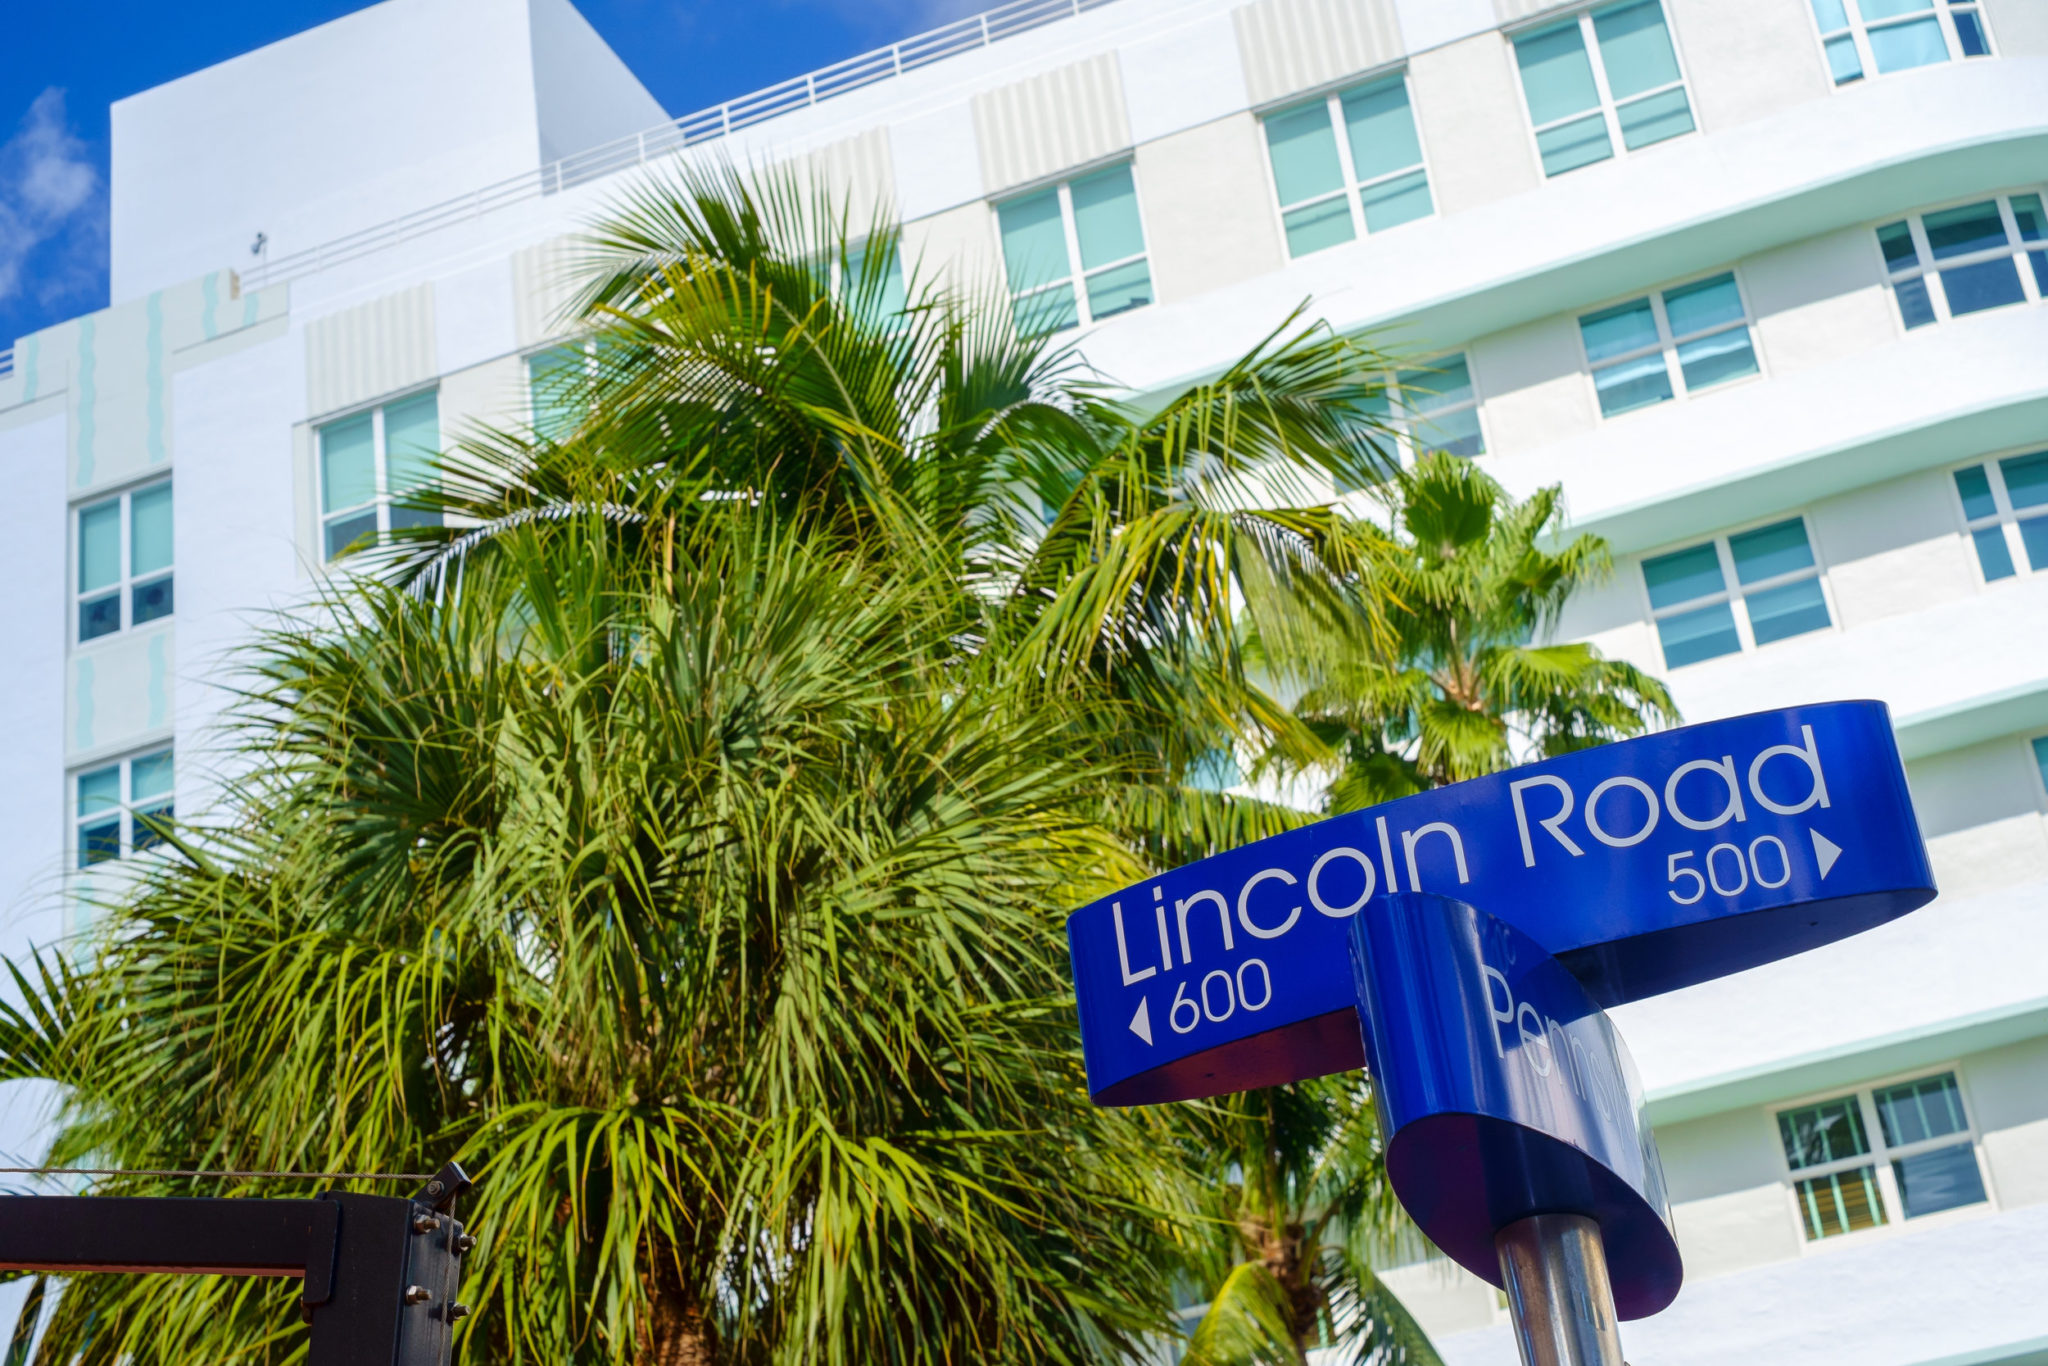 Lincoln Road Mall Dominates Retail Rental Market on Miami Beach